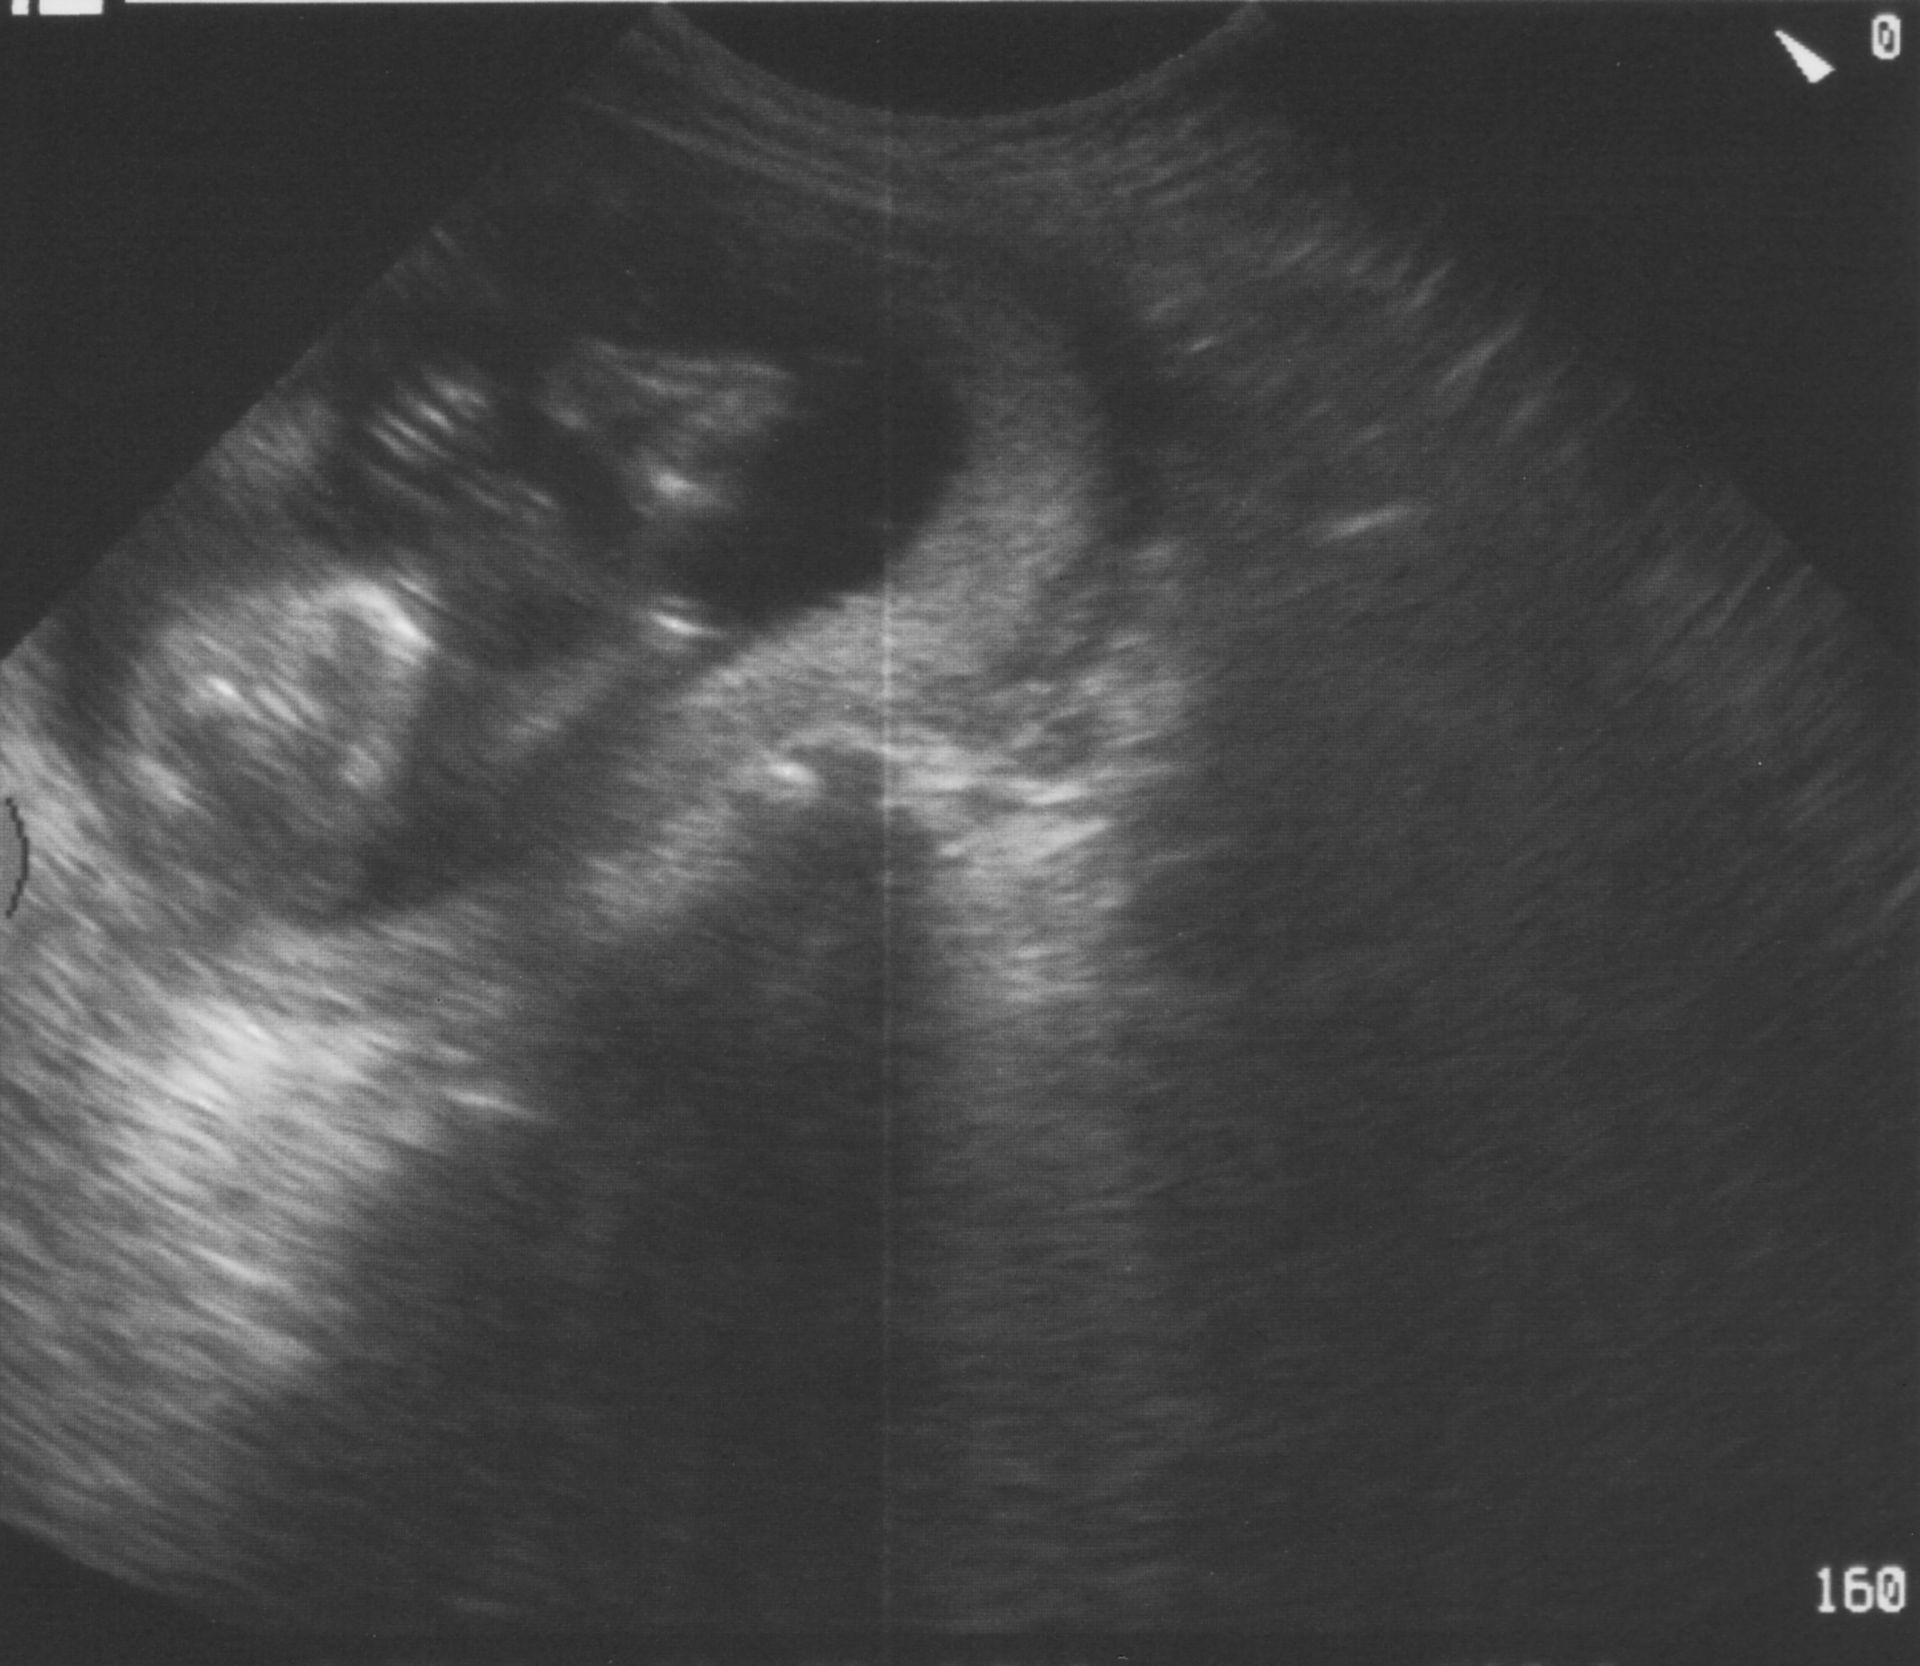 Ultrasound - 16 weeks pregnant